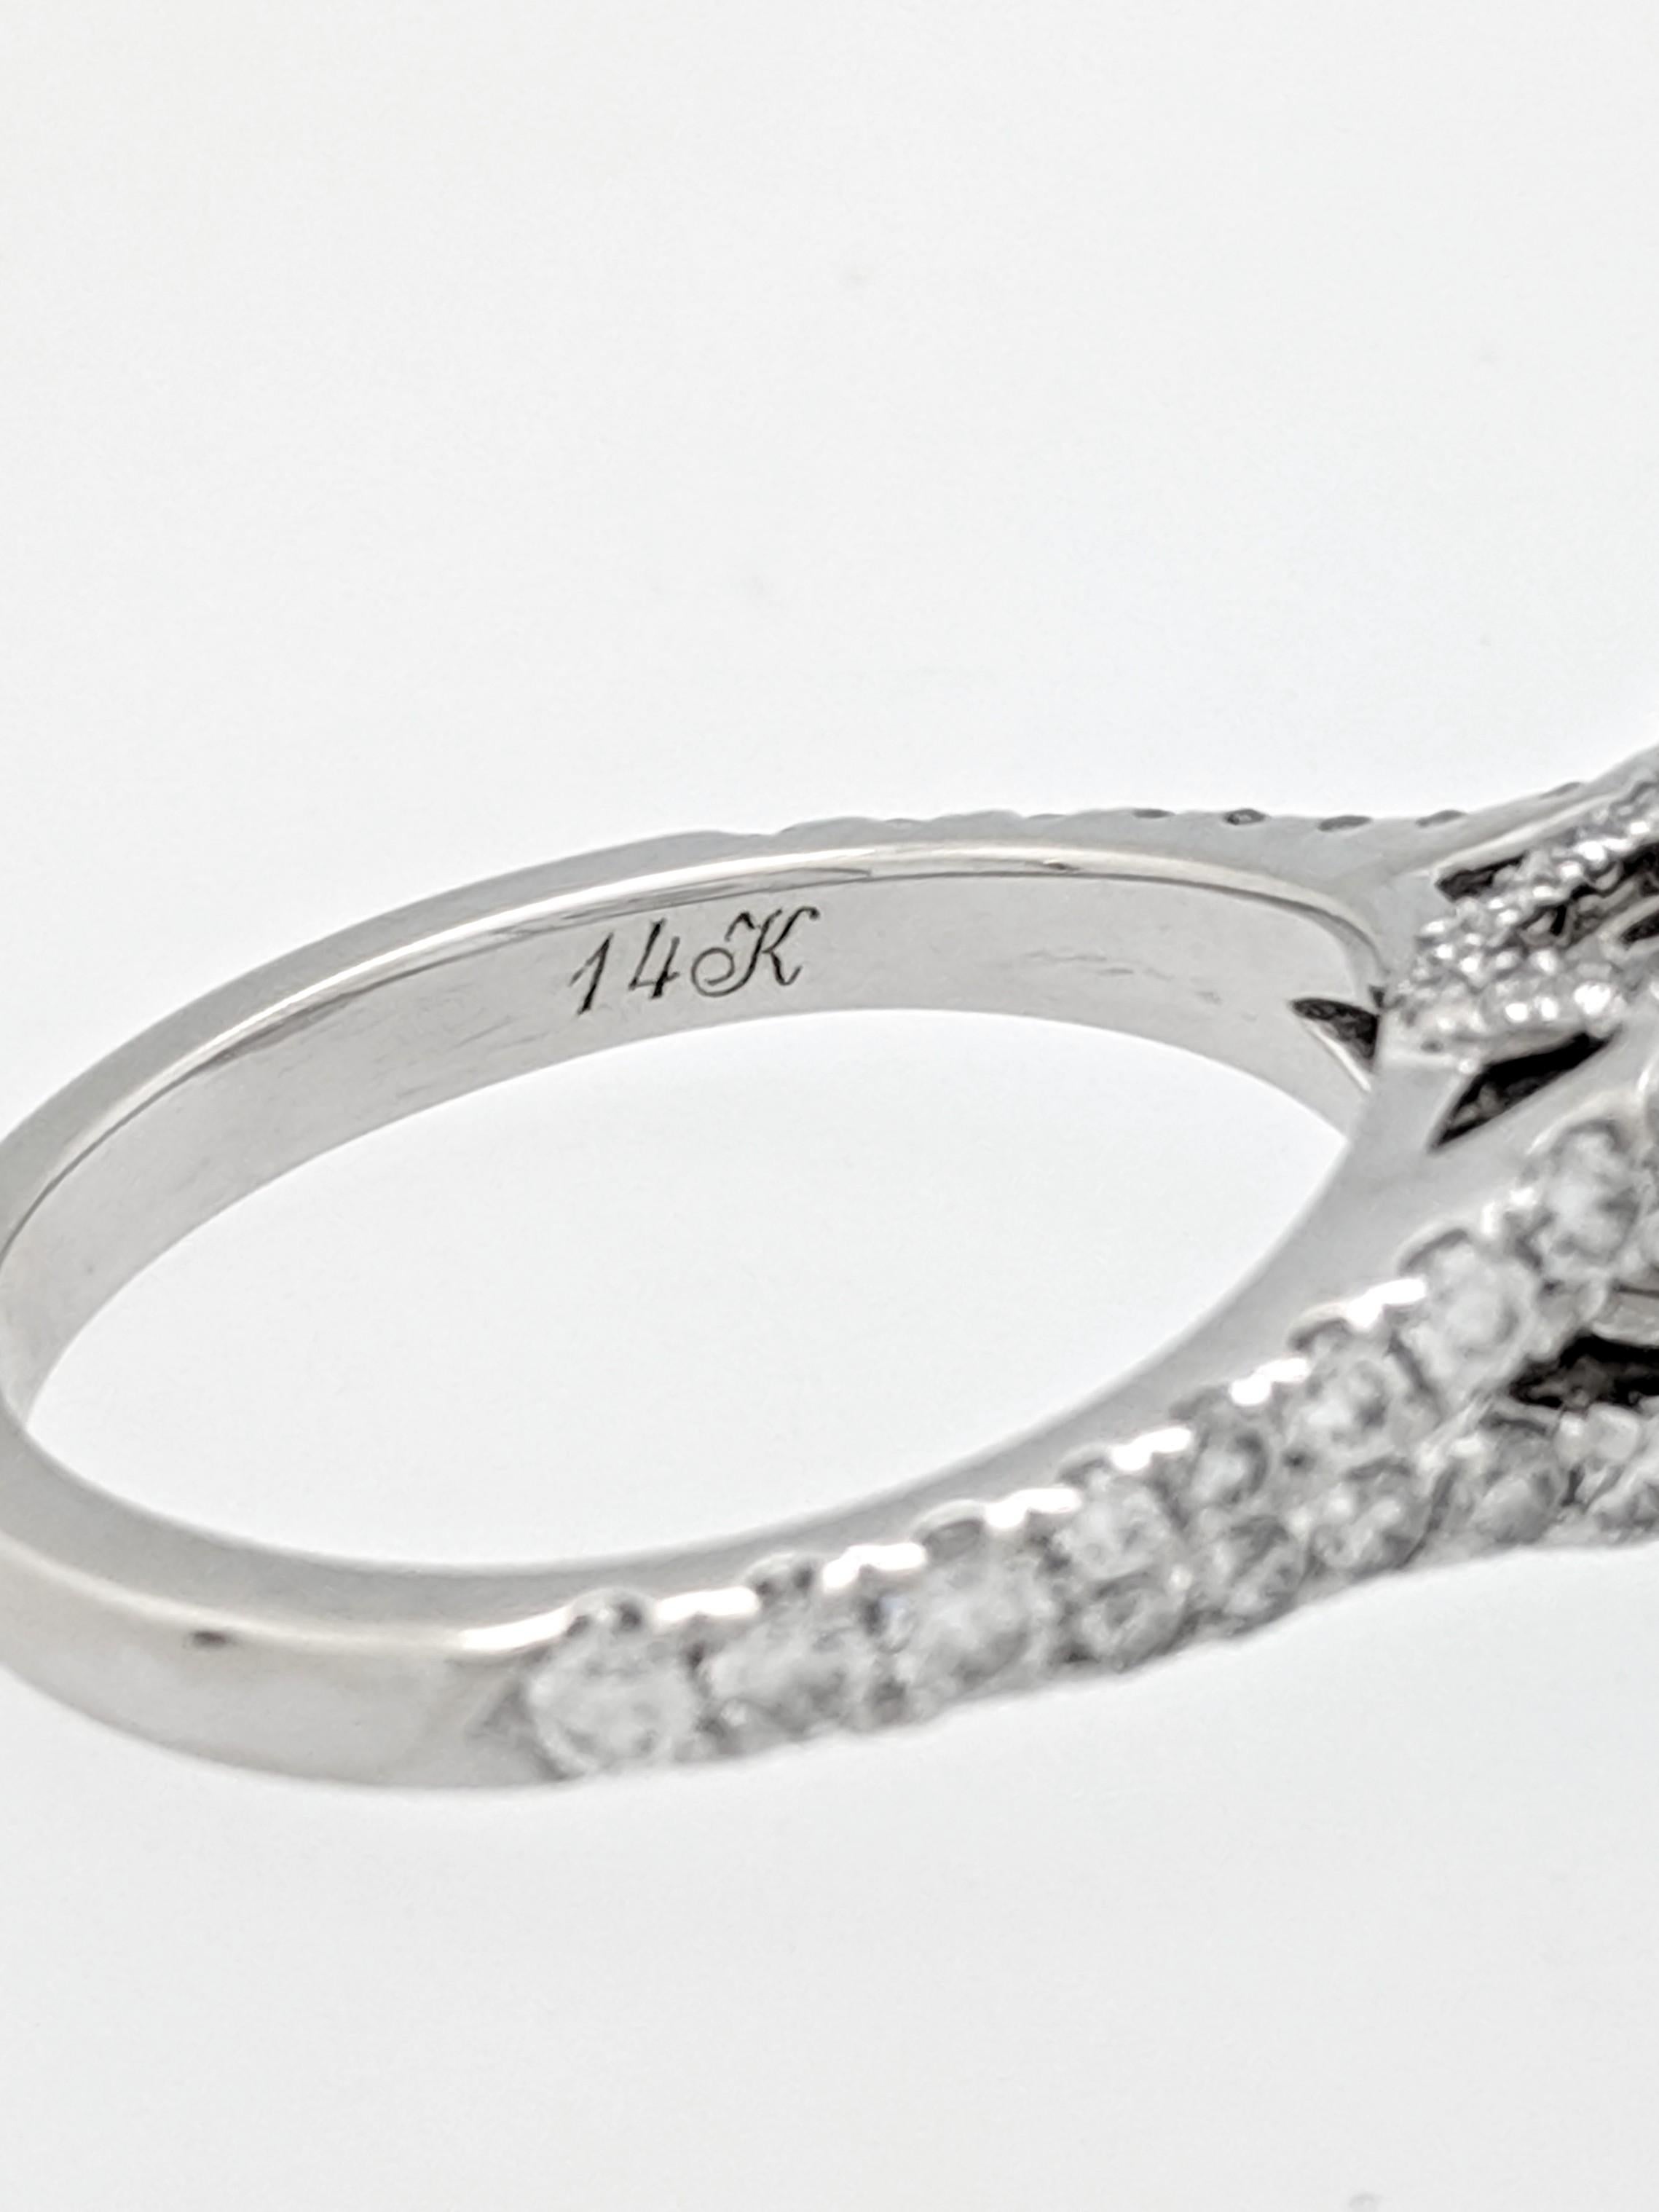 Neil Lane Cushion Halo Engagement Ring 2-1/6ct tw Diamonds Set in 14K White Gold 2